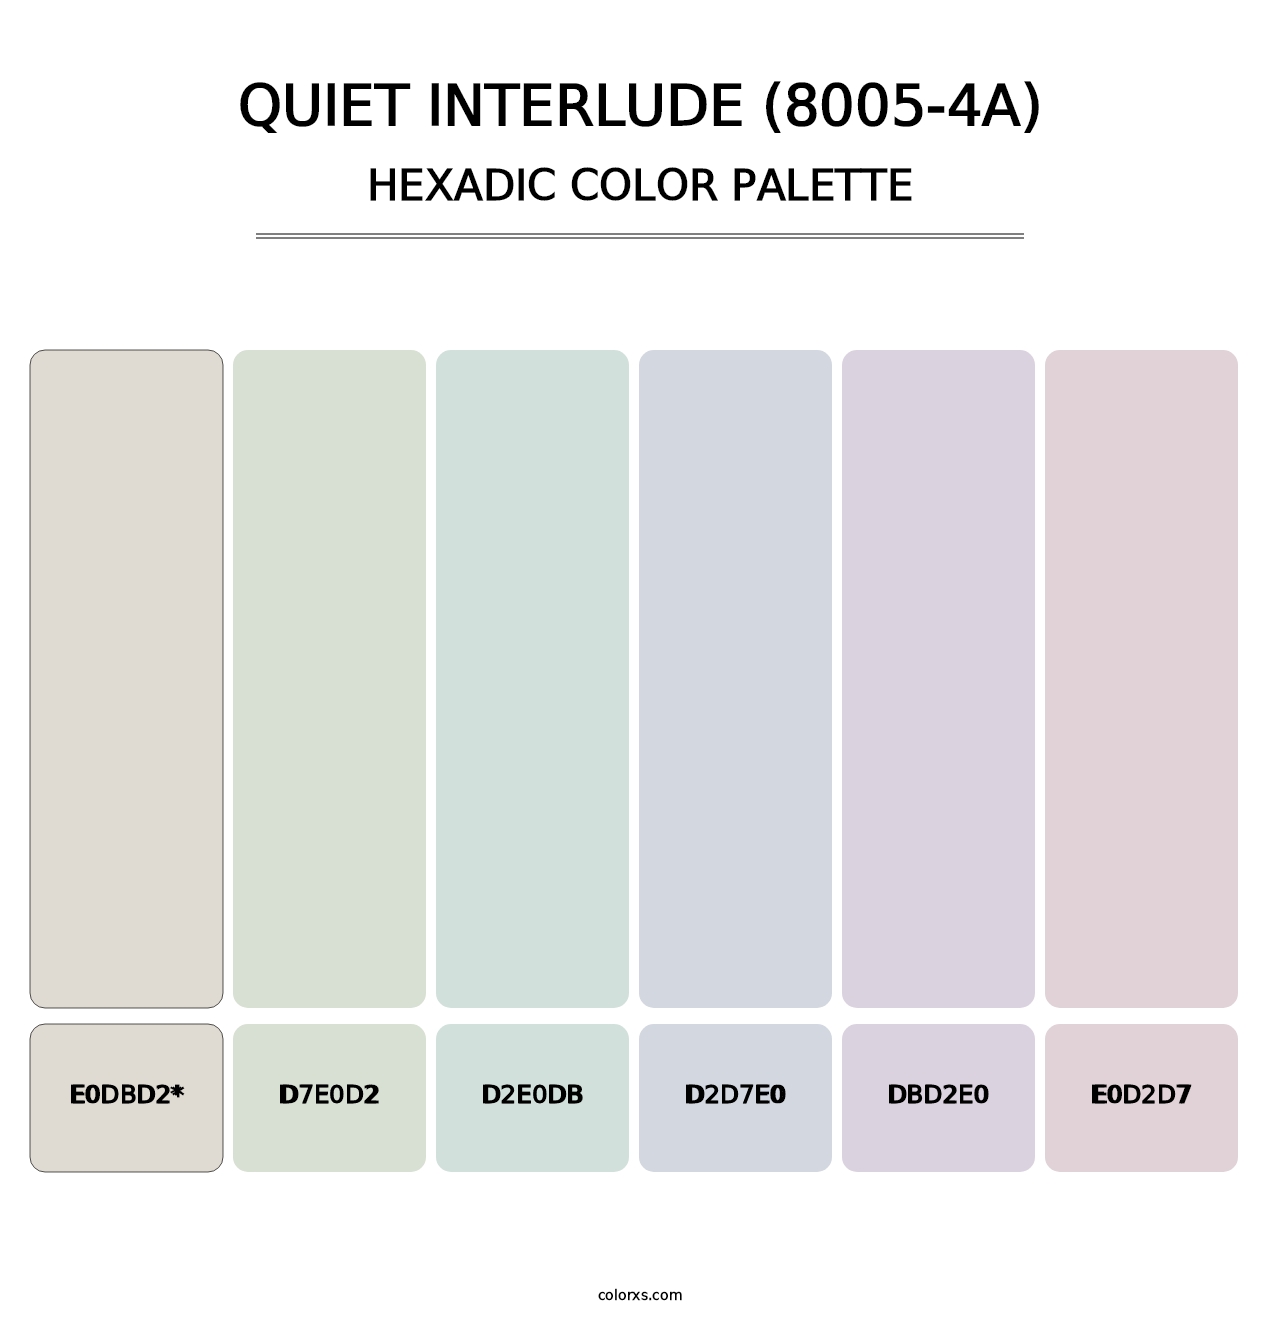 Quiet Interlude (8005-4A) - Hexadic Color Palette